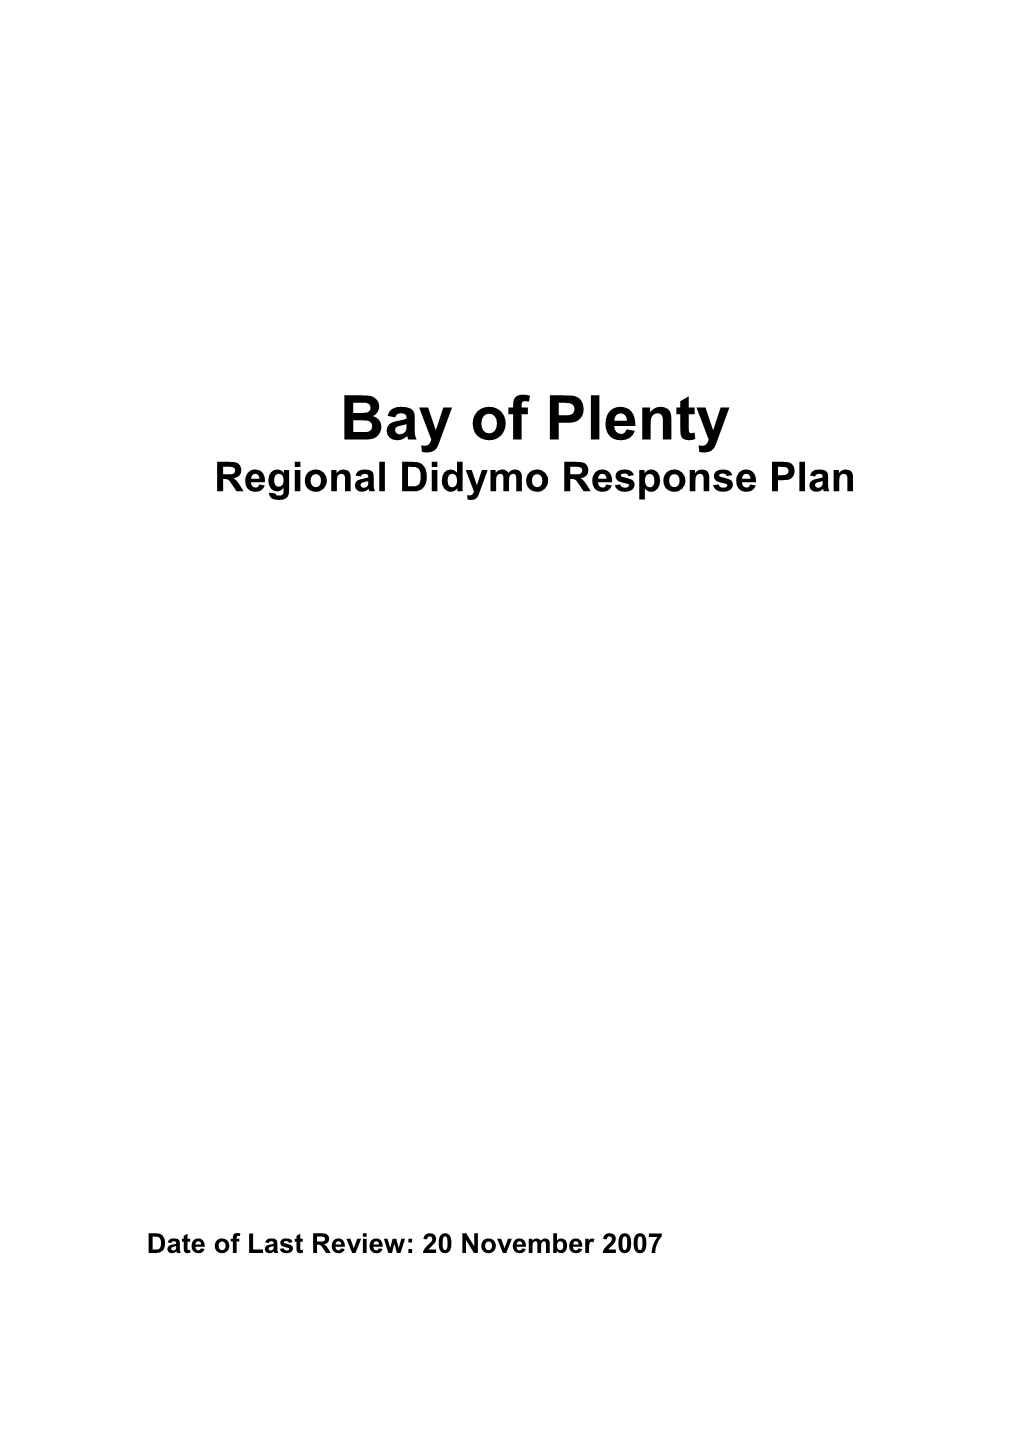 Regional Didymo Response Plan